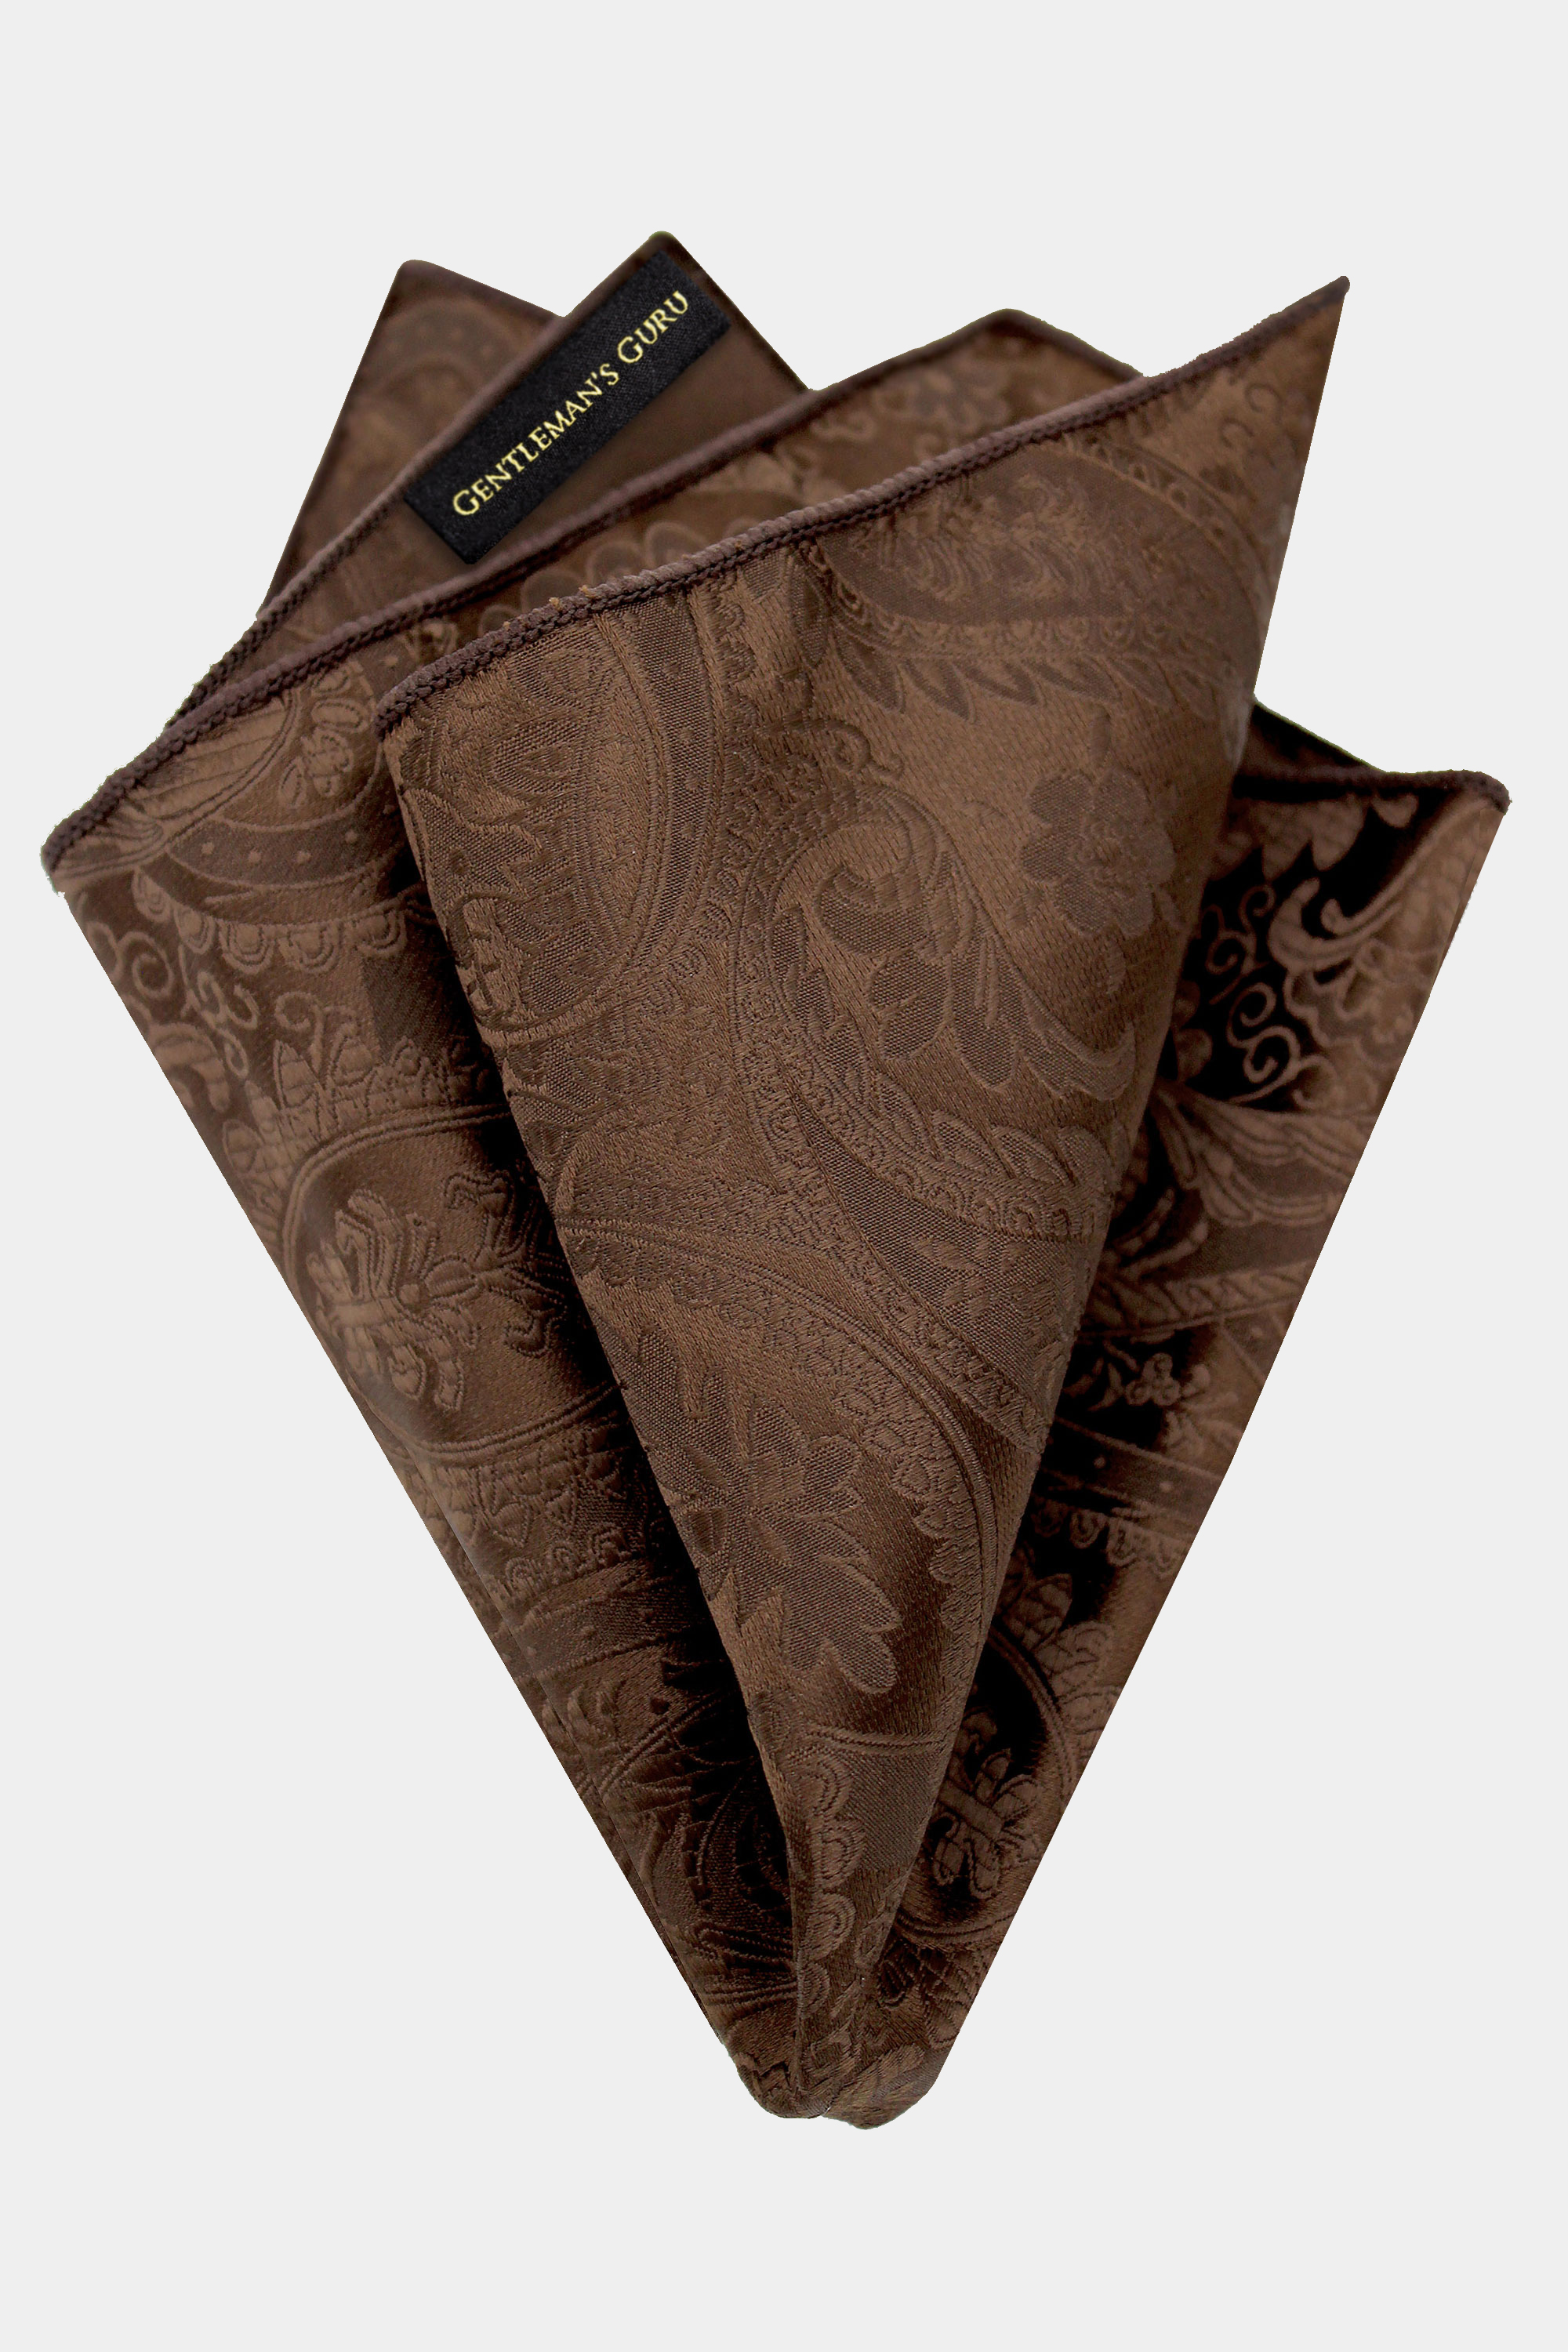 Brown-Paisley-Pocket-Square-Handkerchief-from-Gentlemansguru.com_